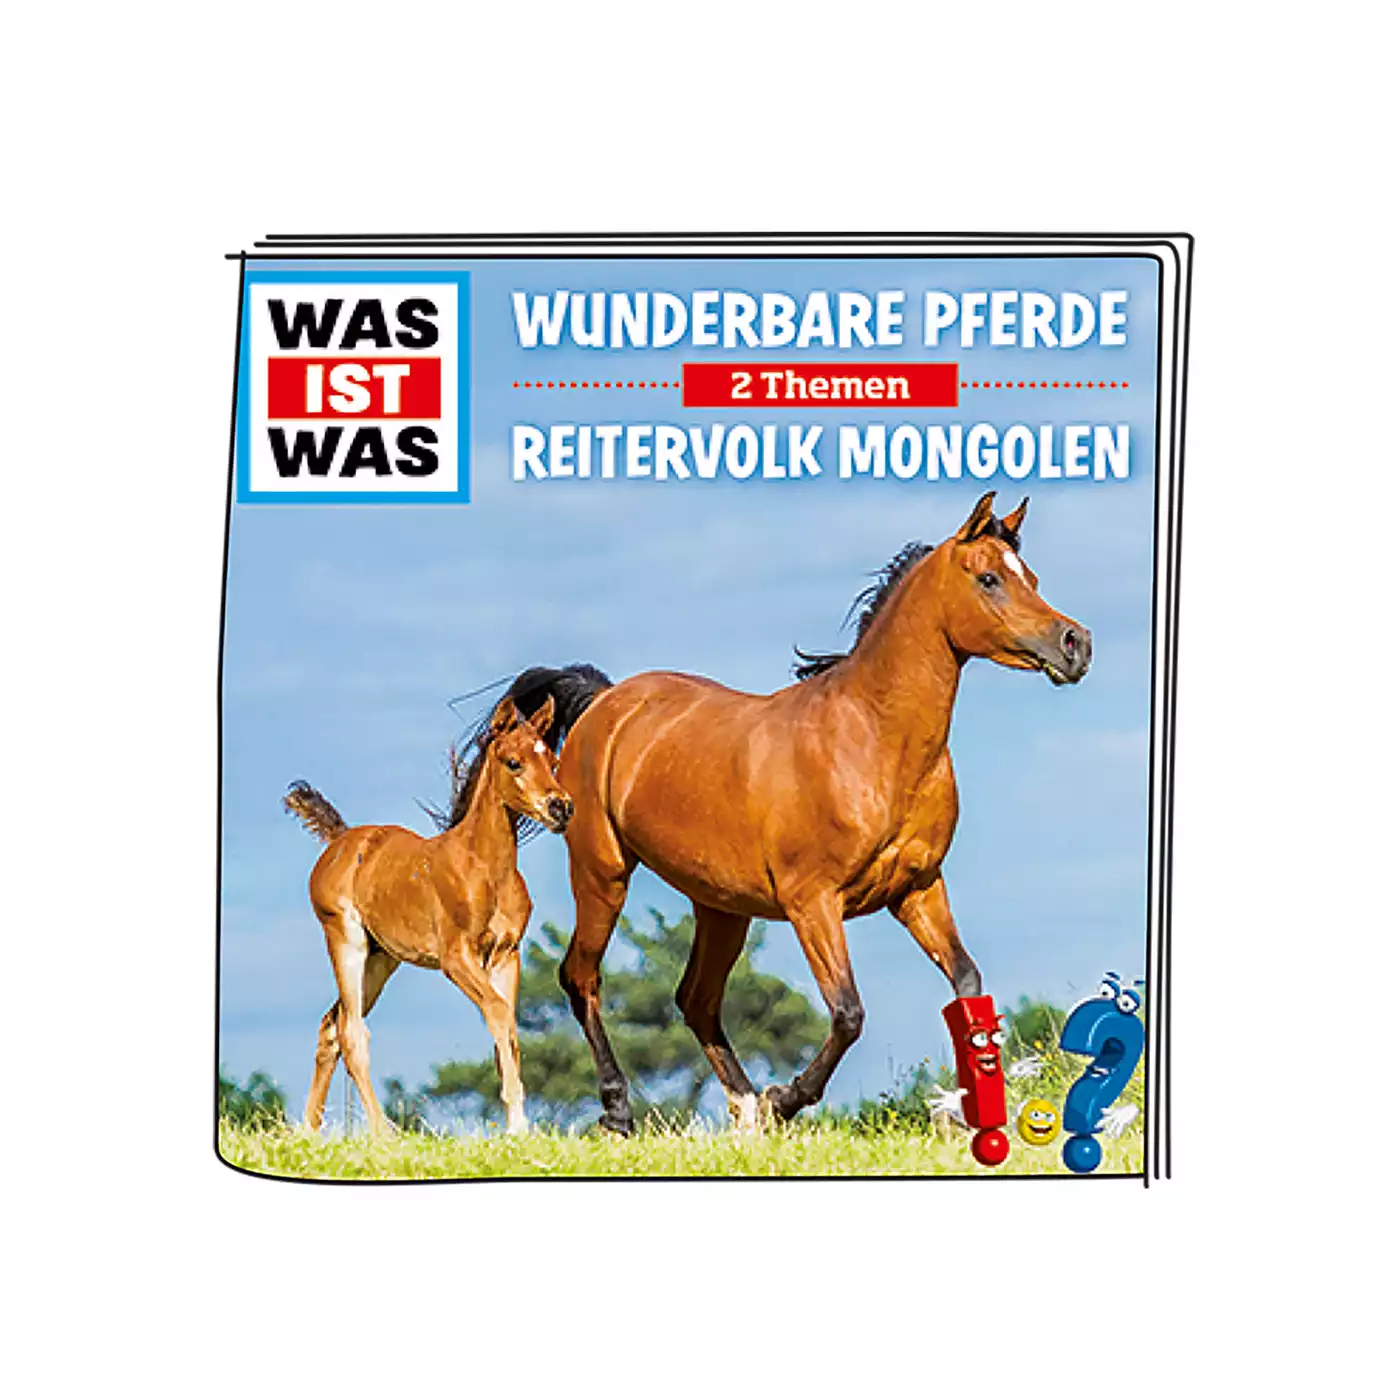 WAS IST WAS - Wunderbare Pferde/Reitervolk Mongolen tonies 2000576033103 5